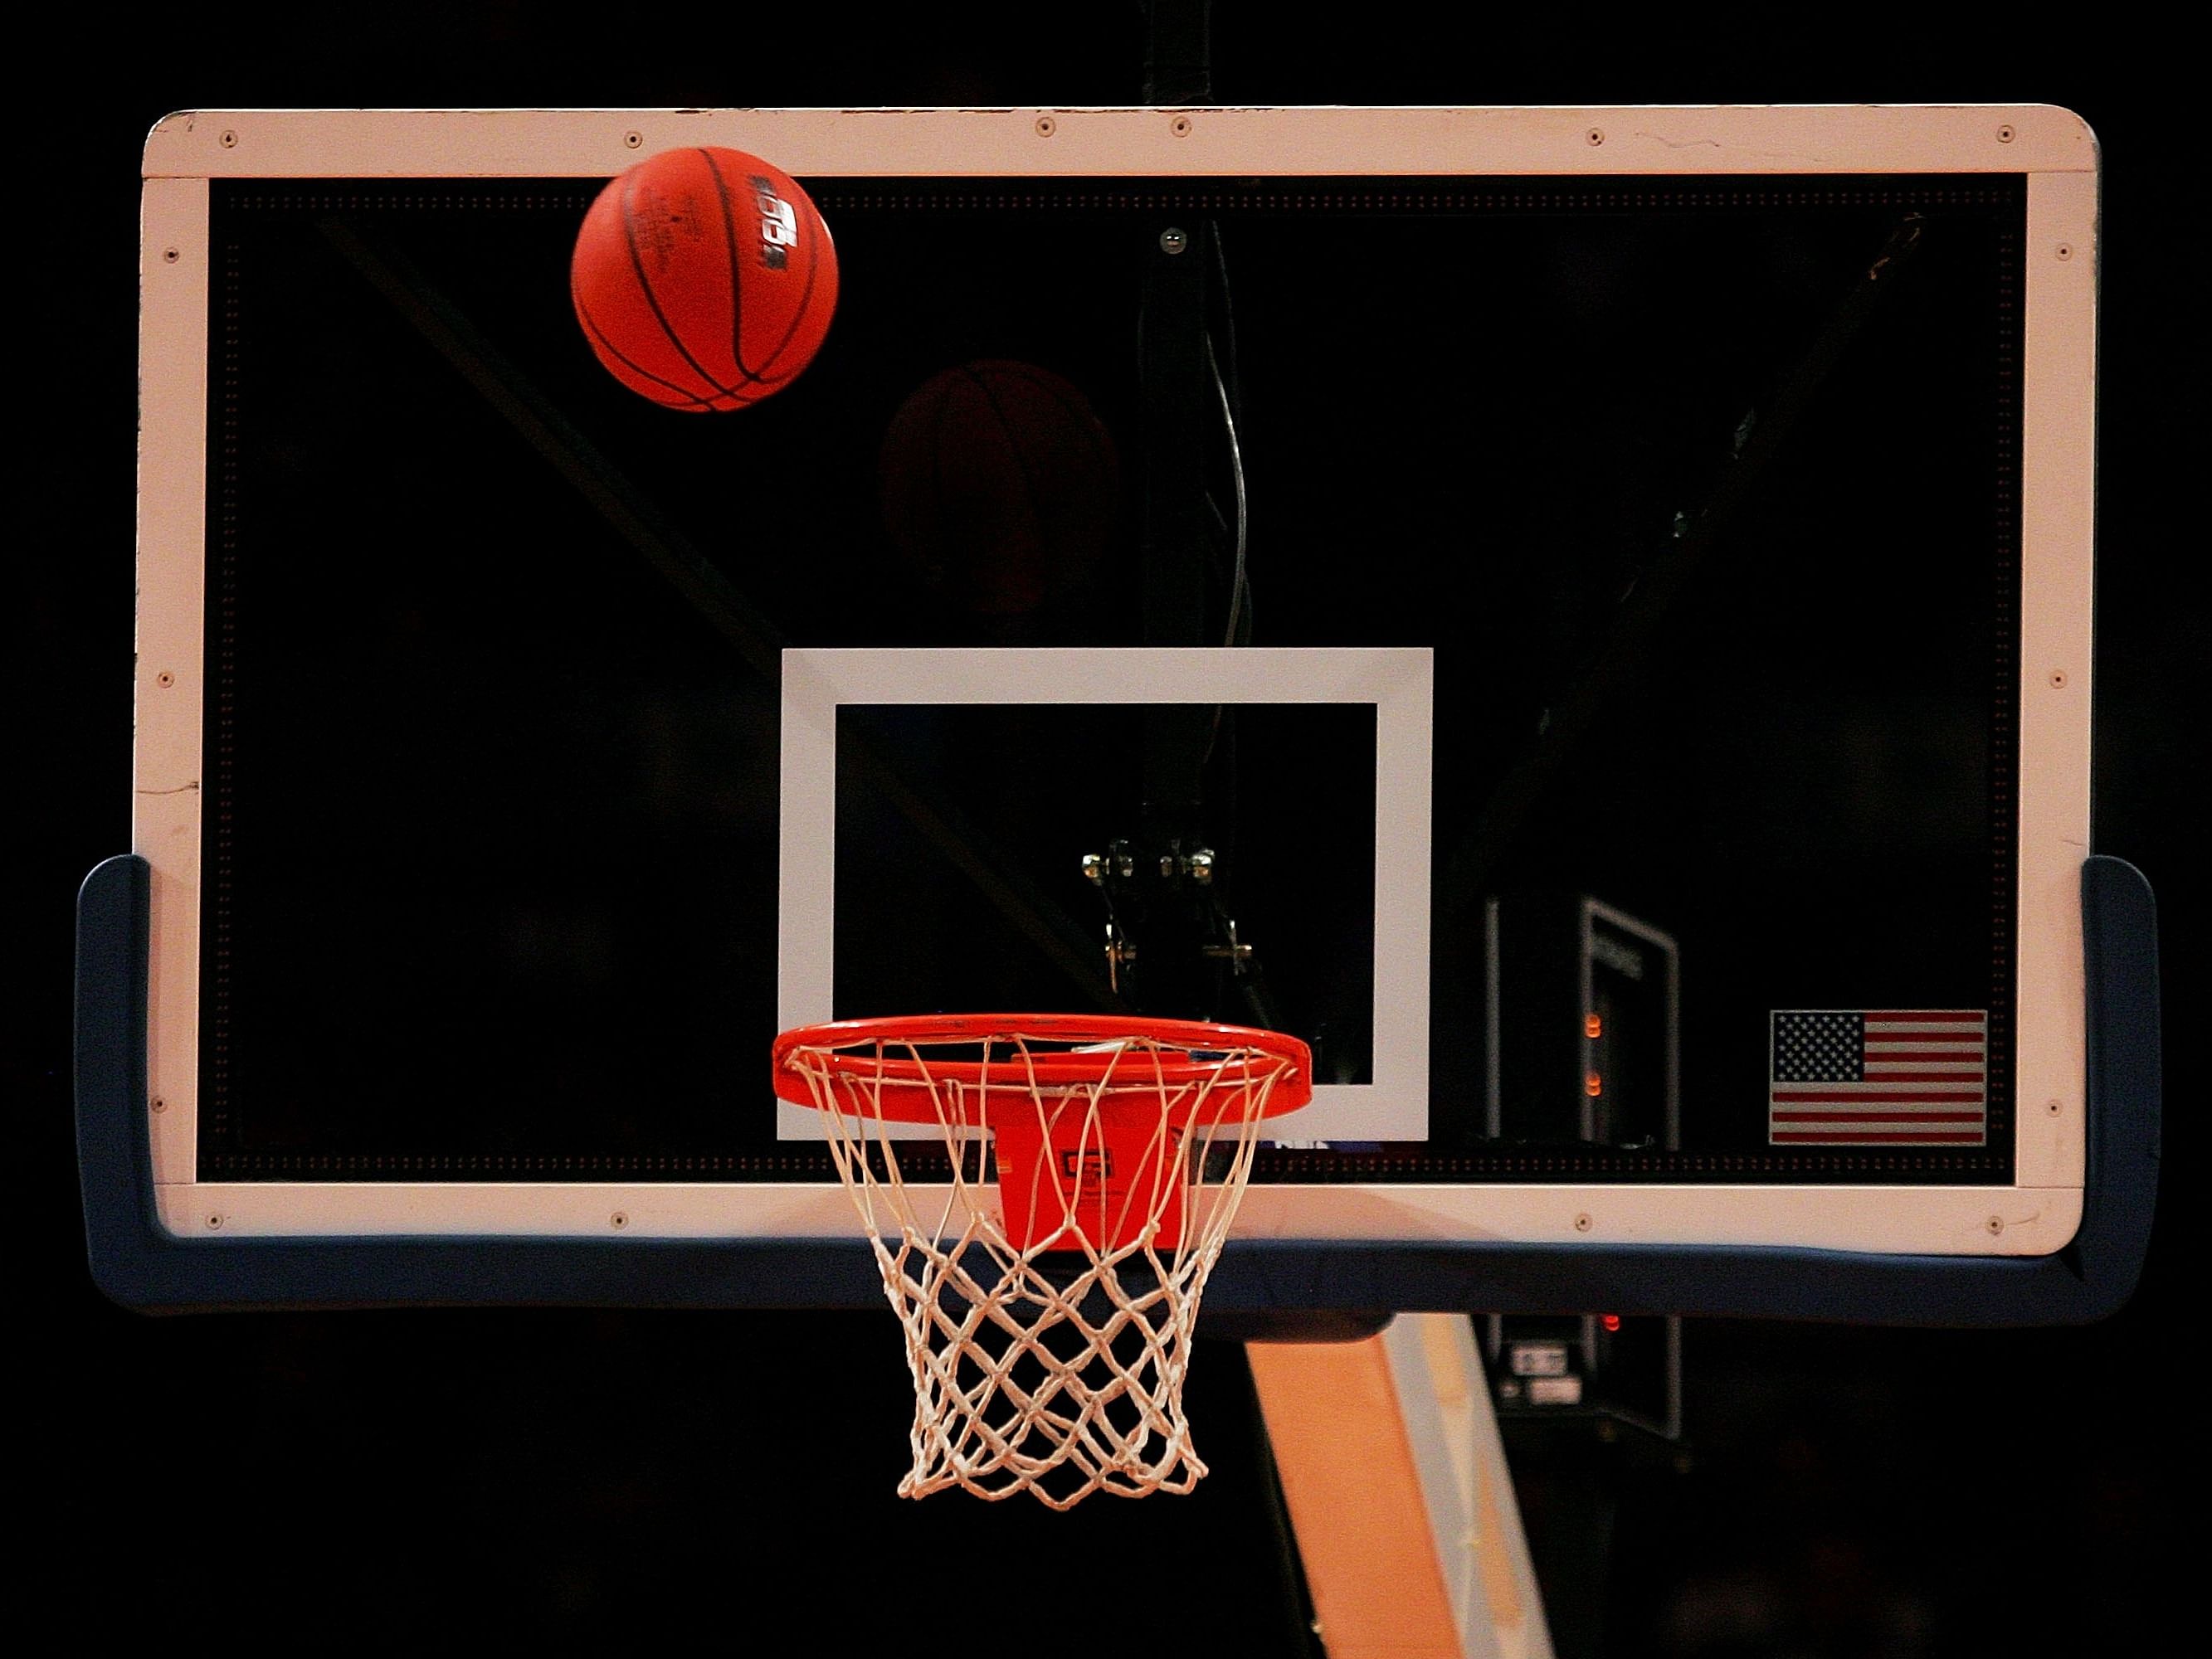 A basketball rim during a game.